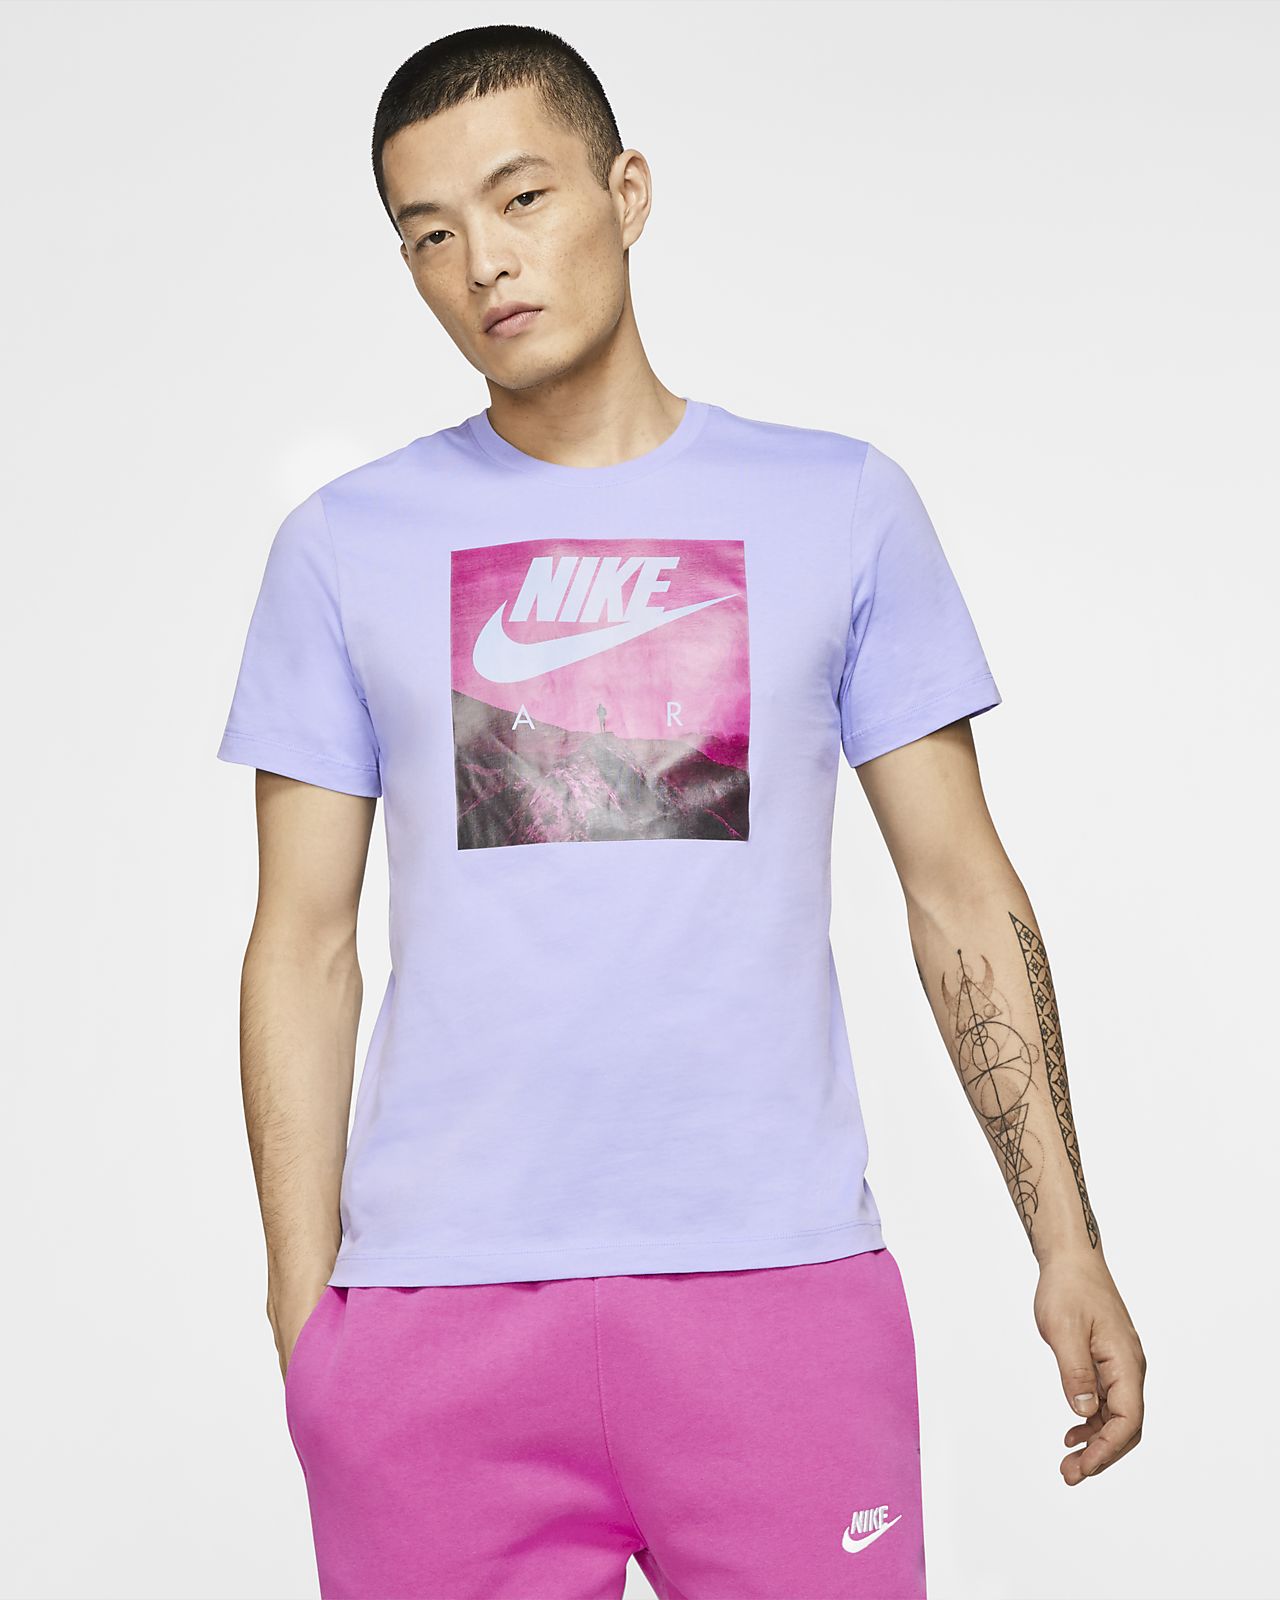 purple and pink nike shirt